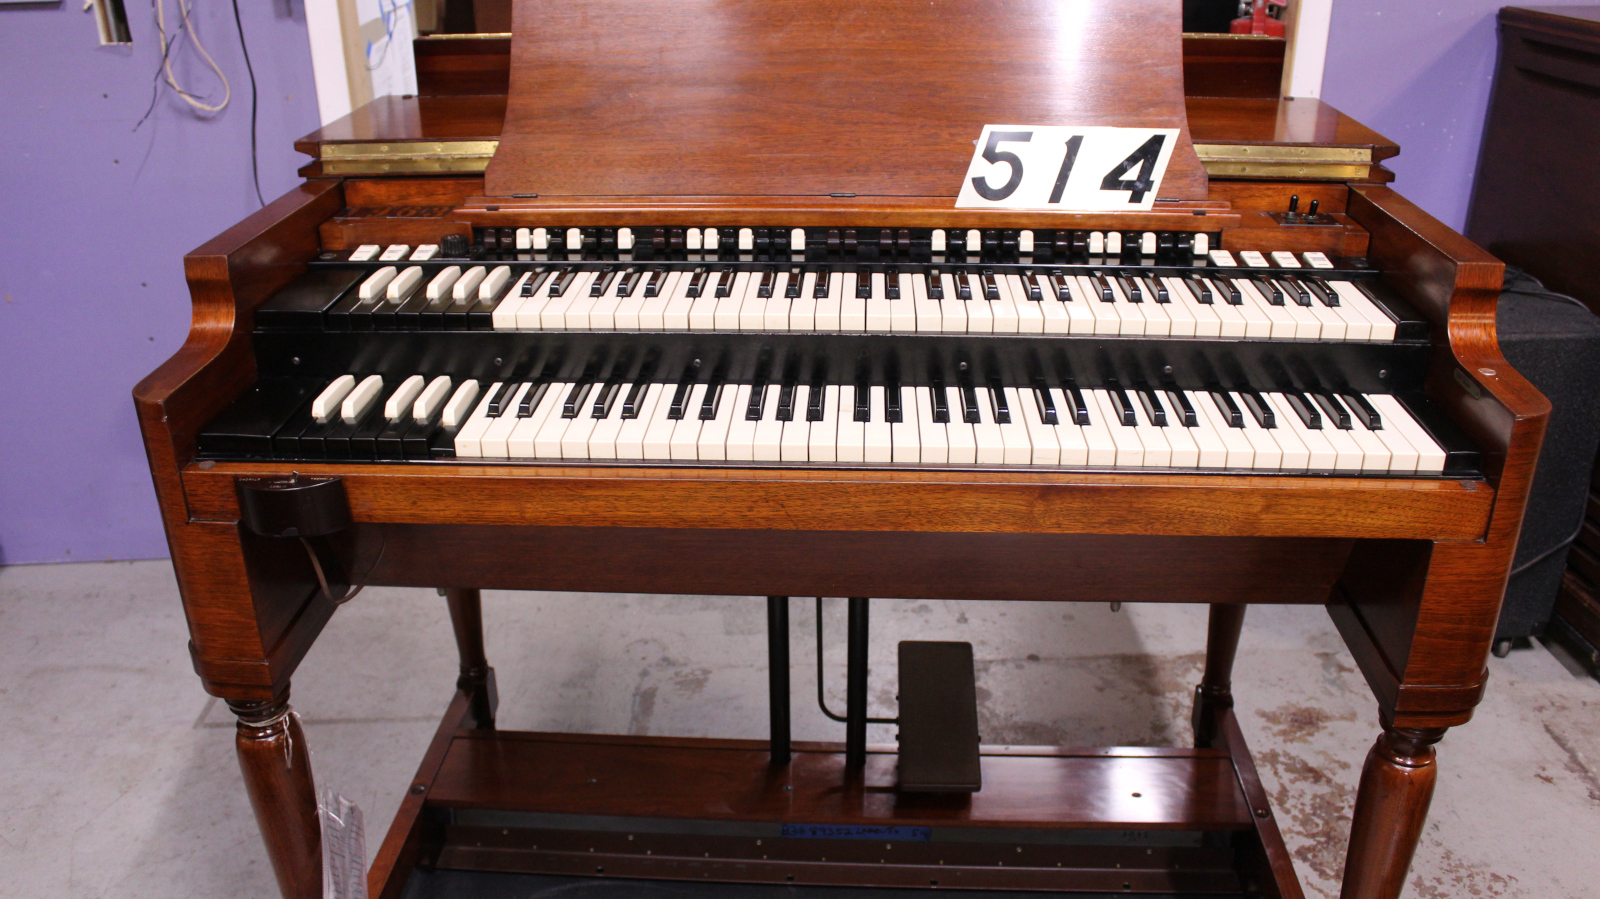 514 is a 1963 Hammond B3 in a Mahogany finish. Serial #89352